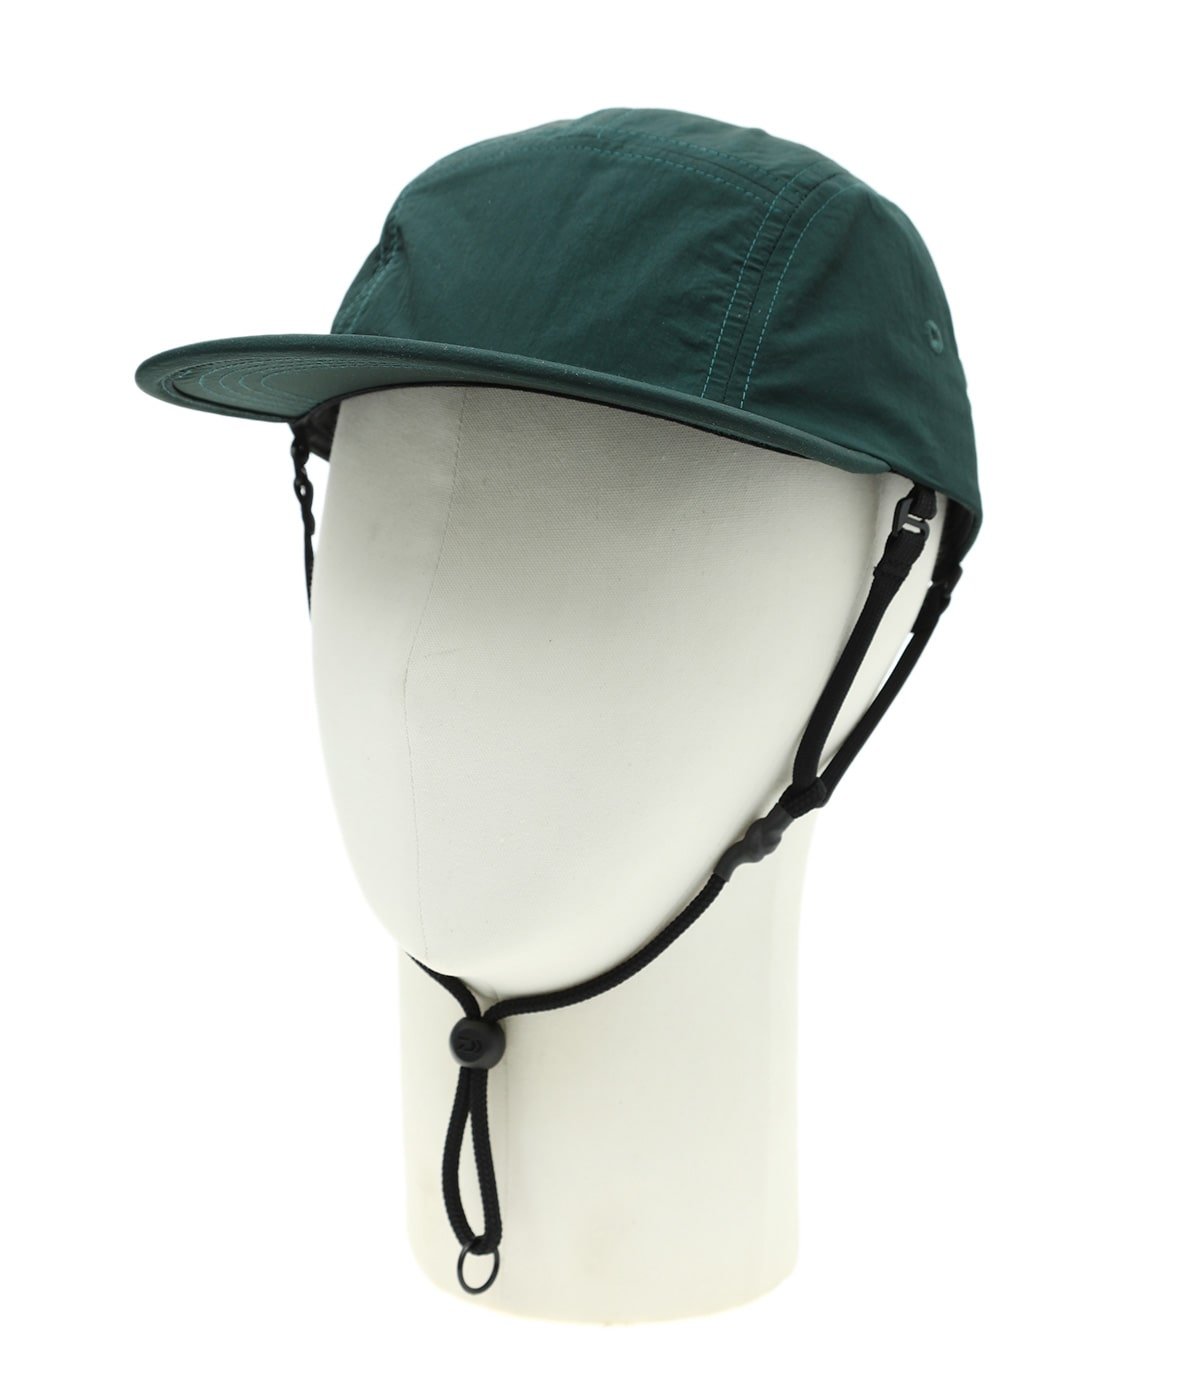 DAIWA PIER39(ダイワ ピアサーティナイン) Tech Angler's Cap / 帽子 